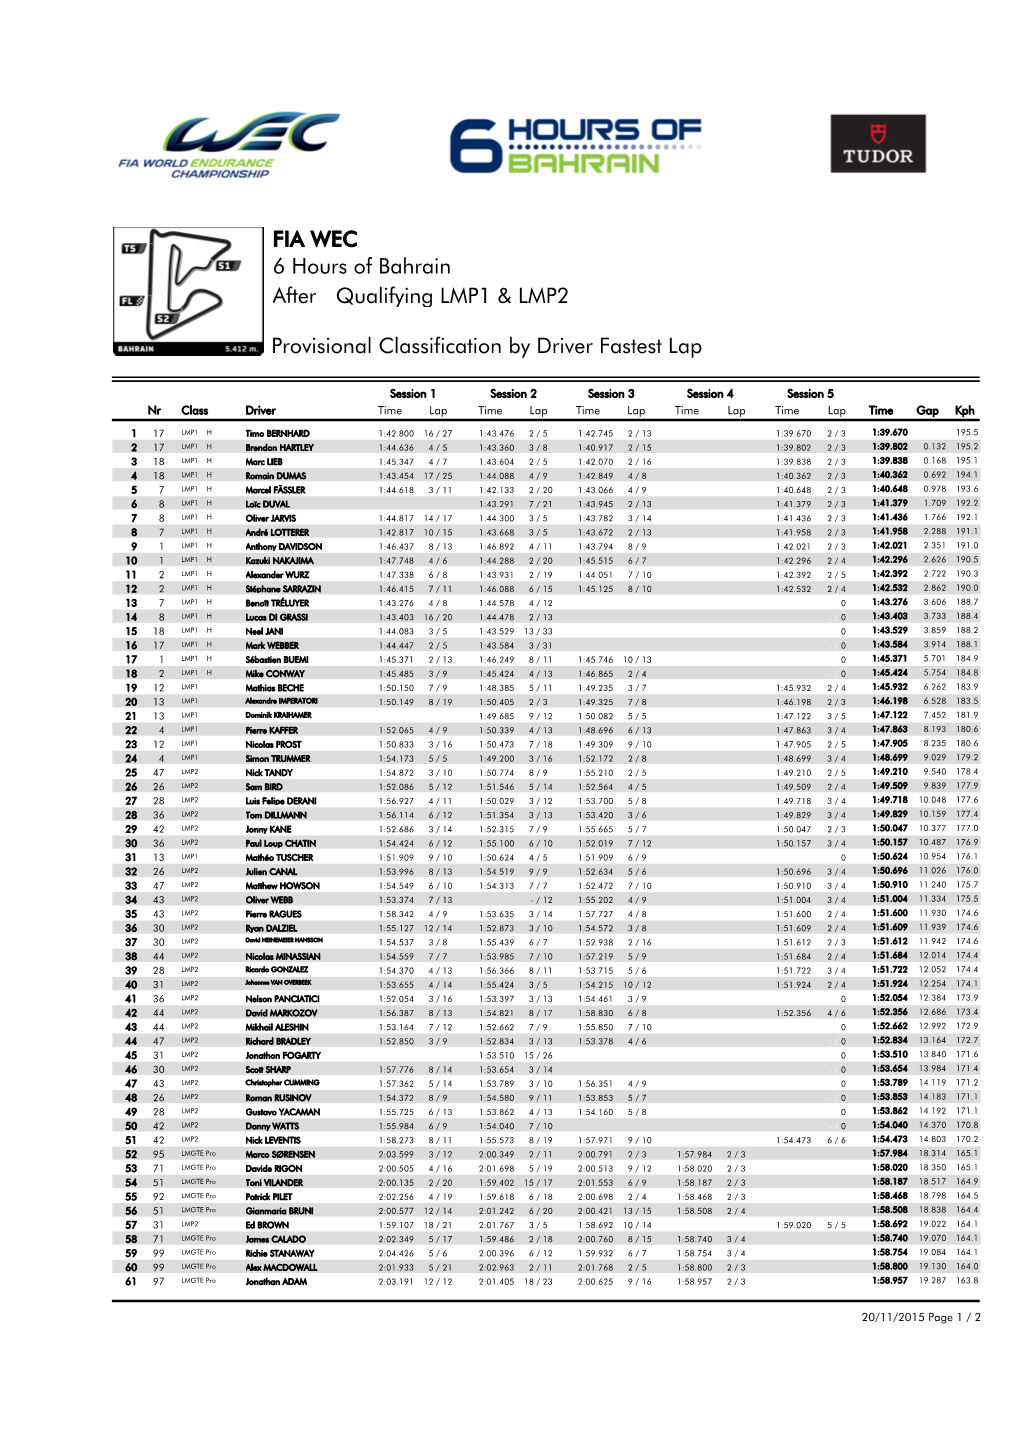 Qualifying LMP1 & LMP2 6 Hours of Bahrain FIA